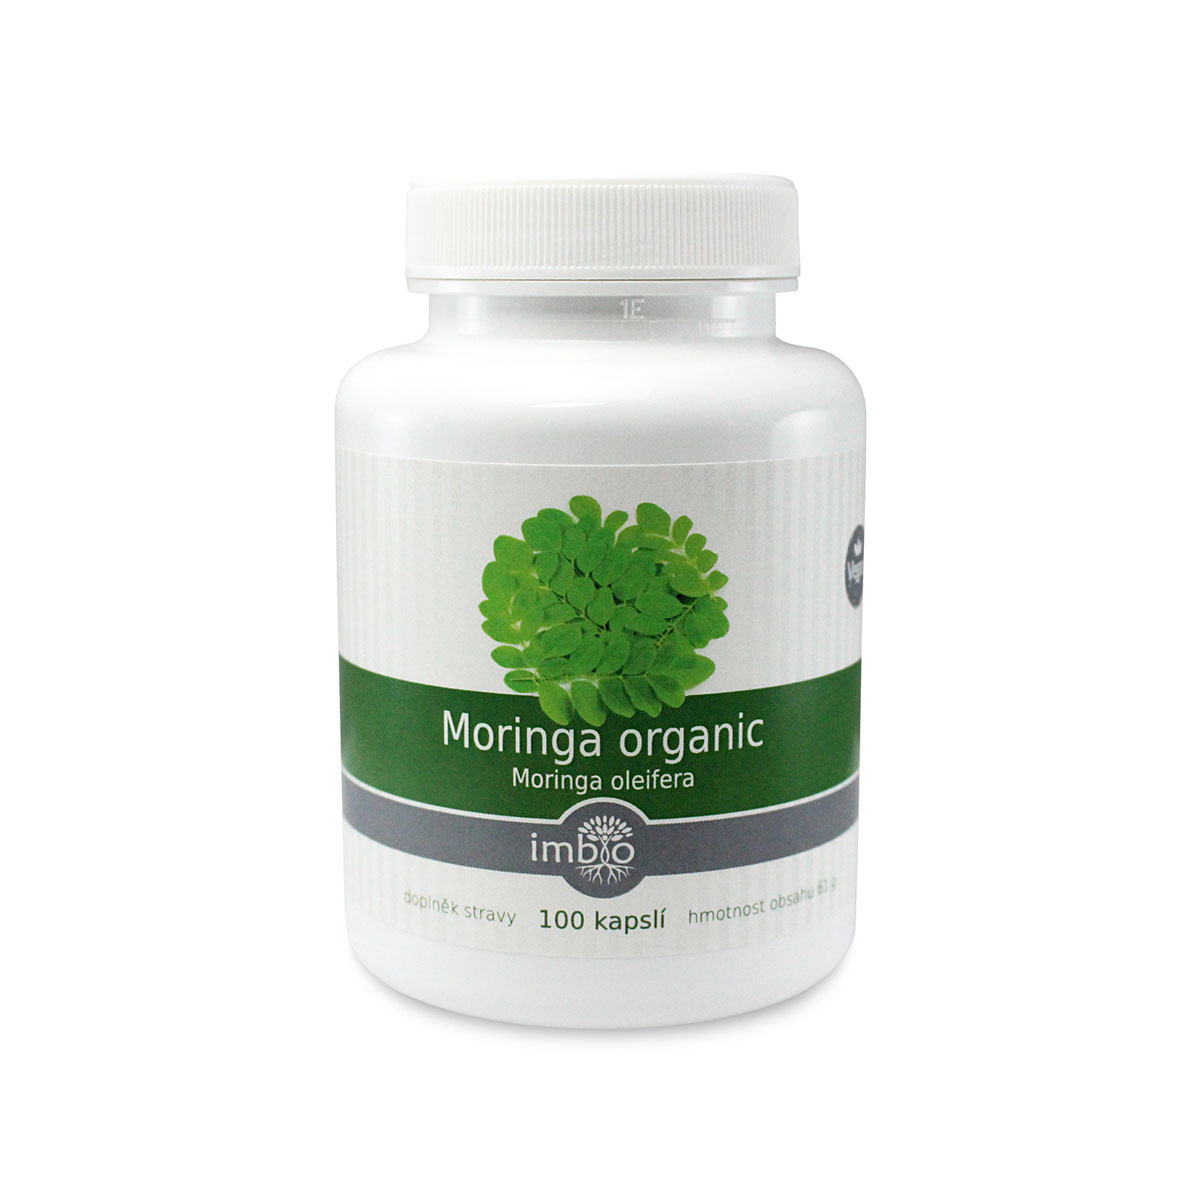 imbio Moringa organic 100 cps